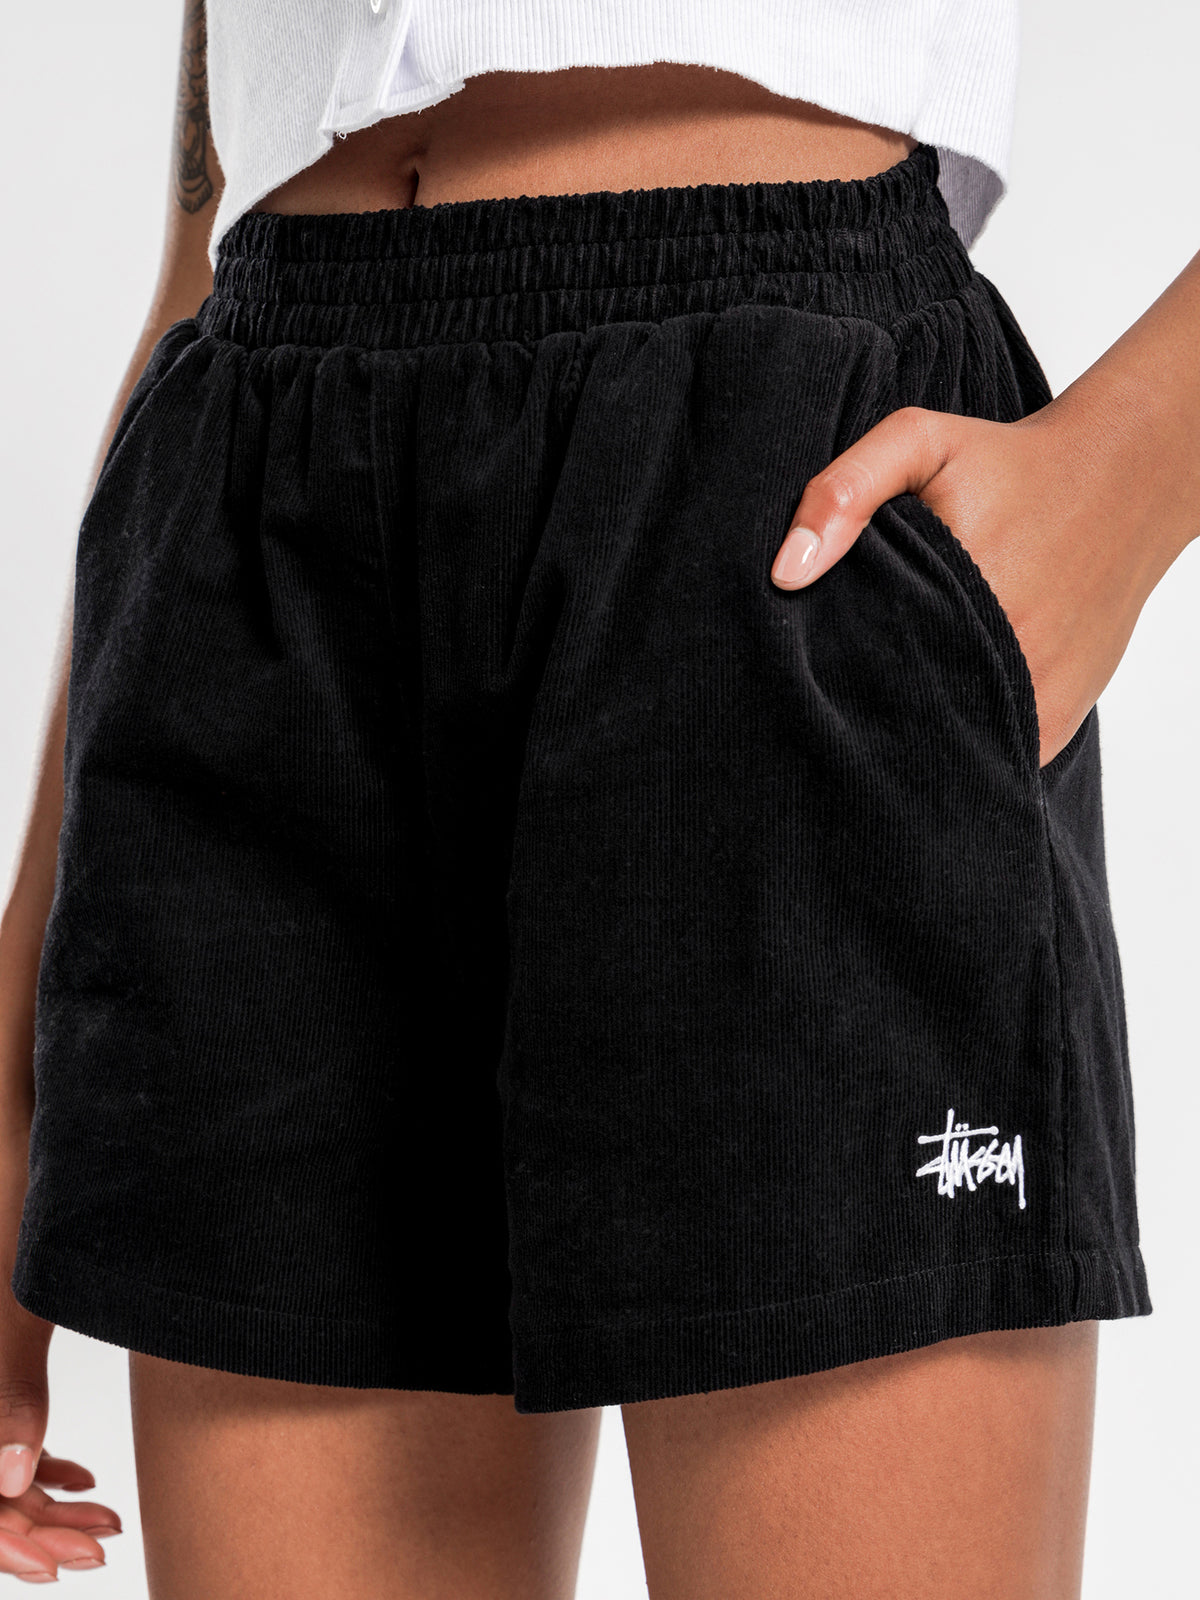 Stock Cord Shorts in Black